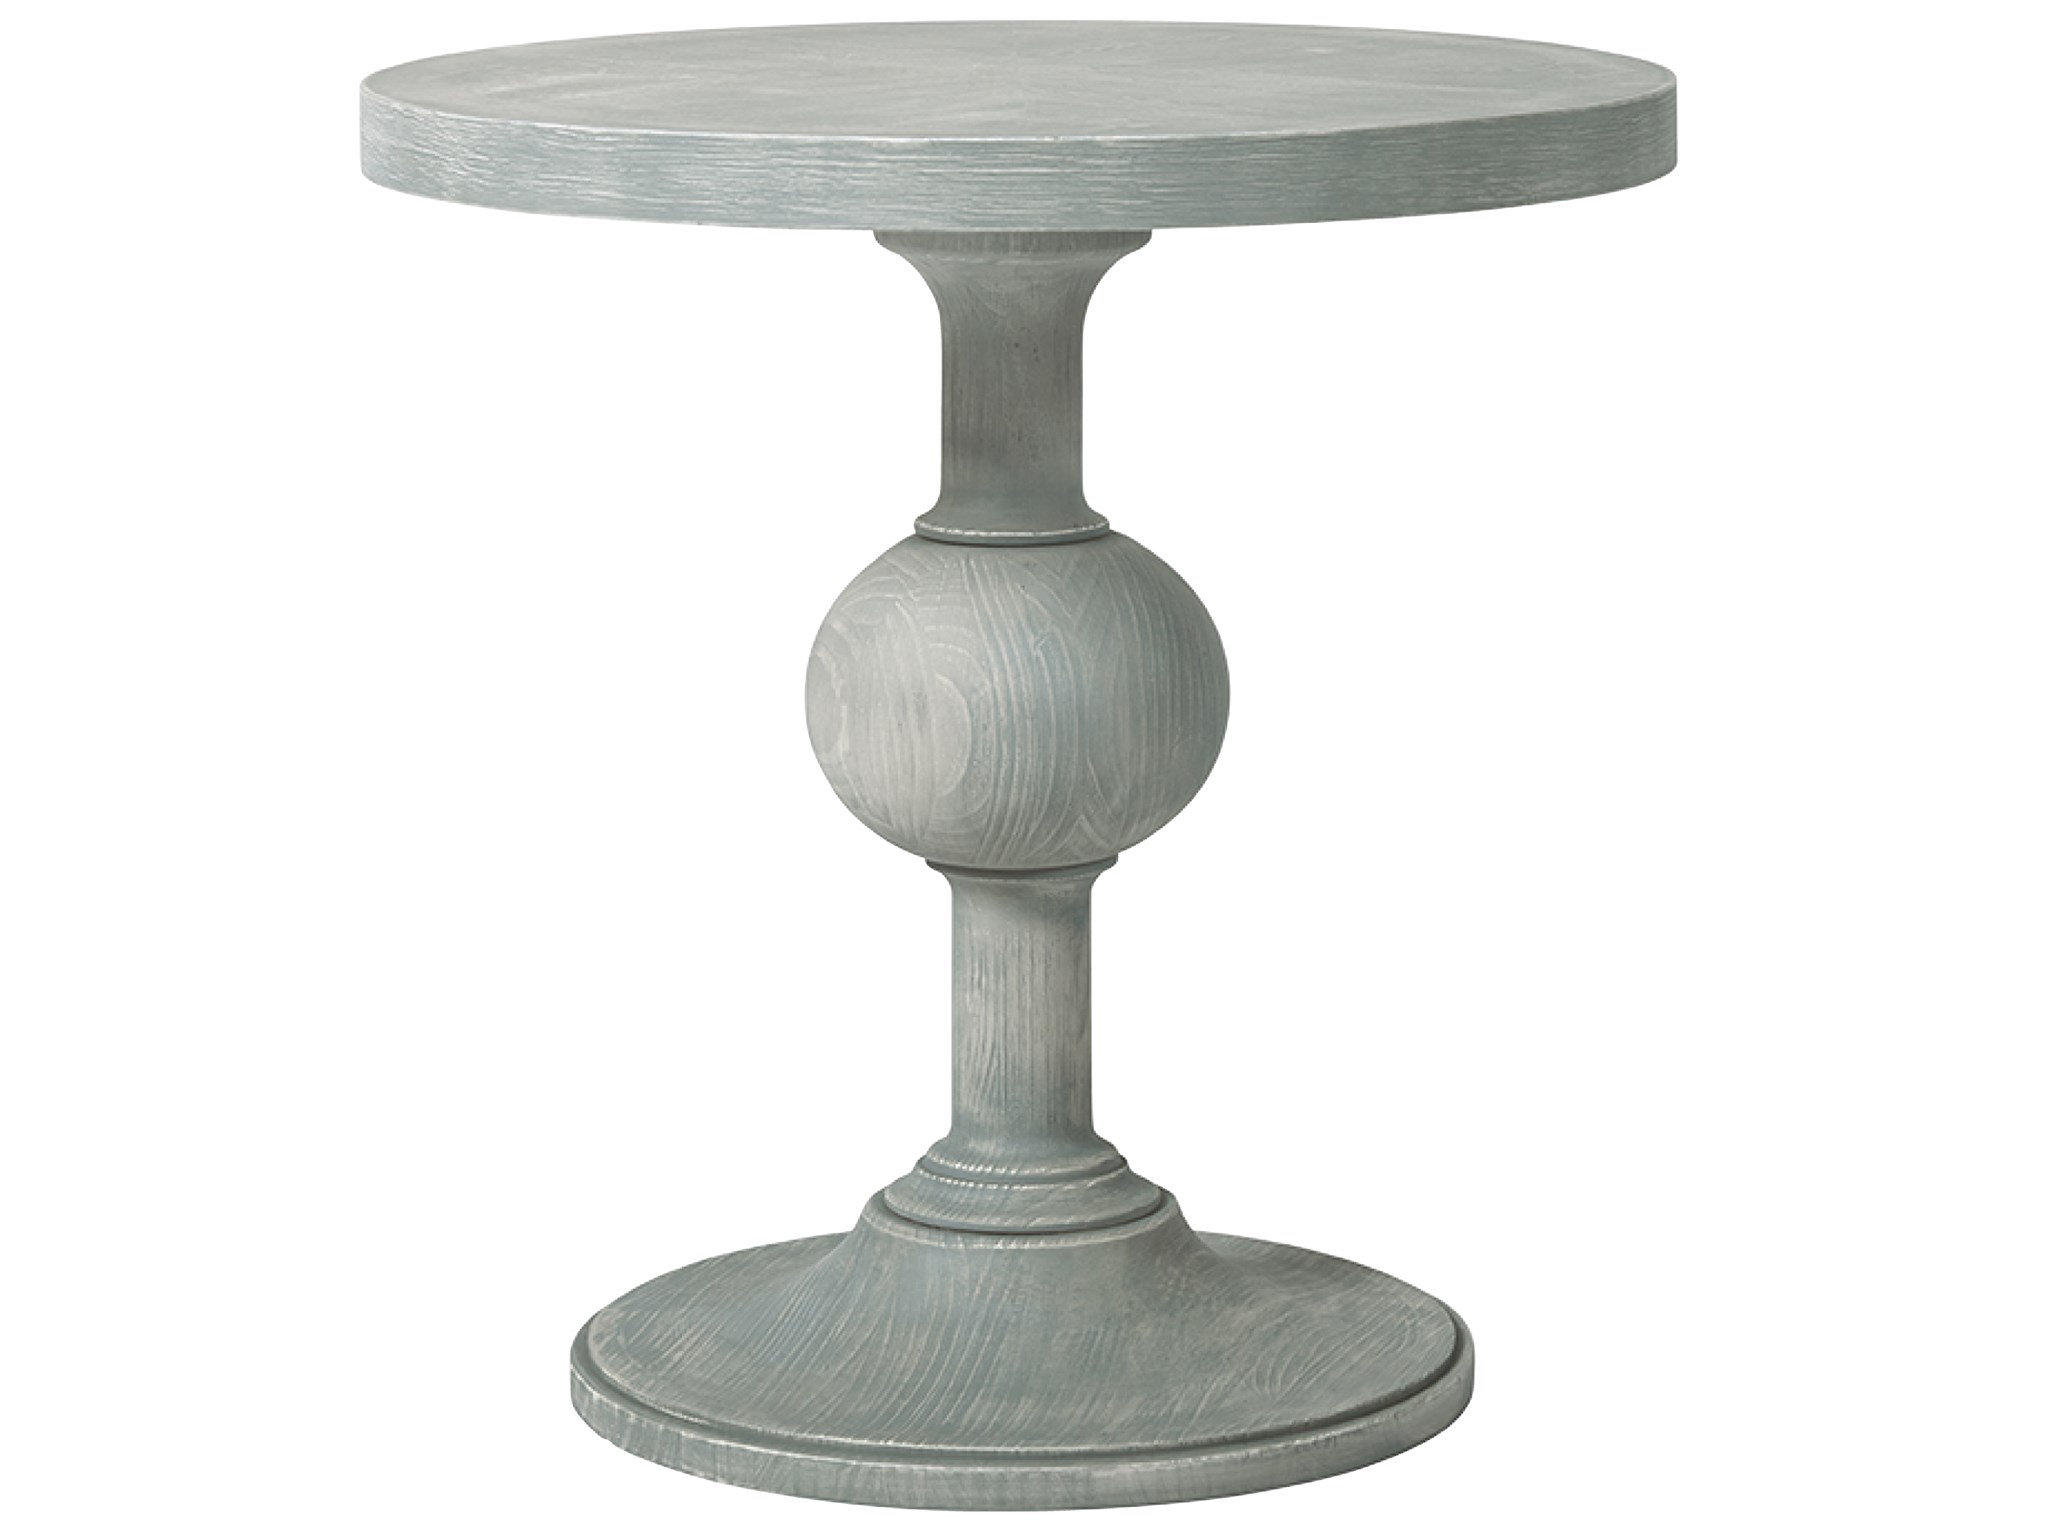 Round Pedestal End Table